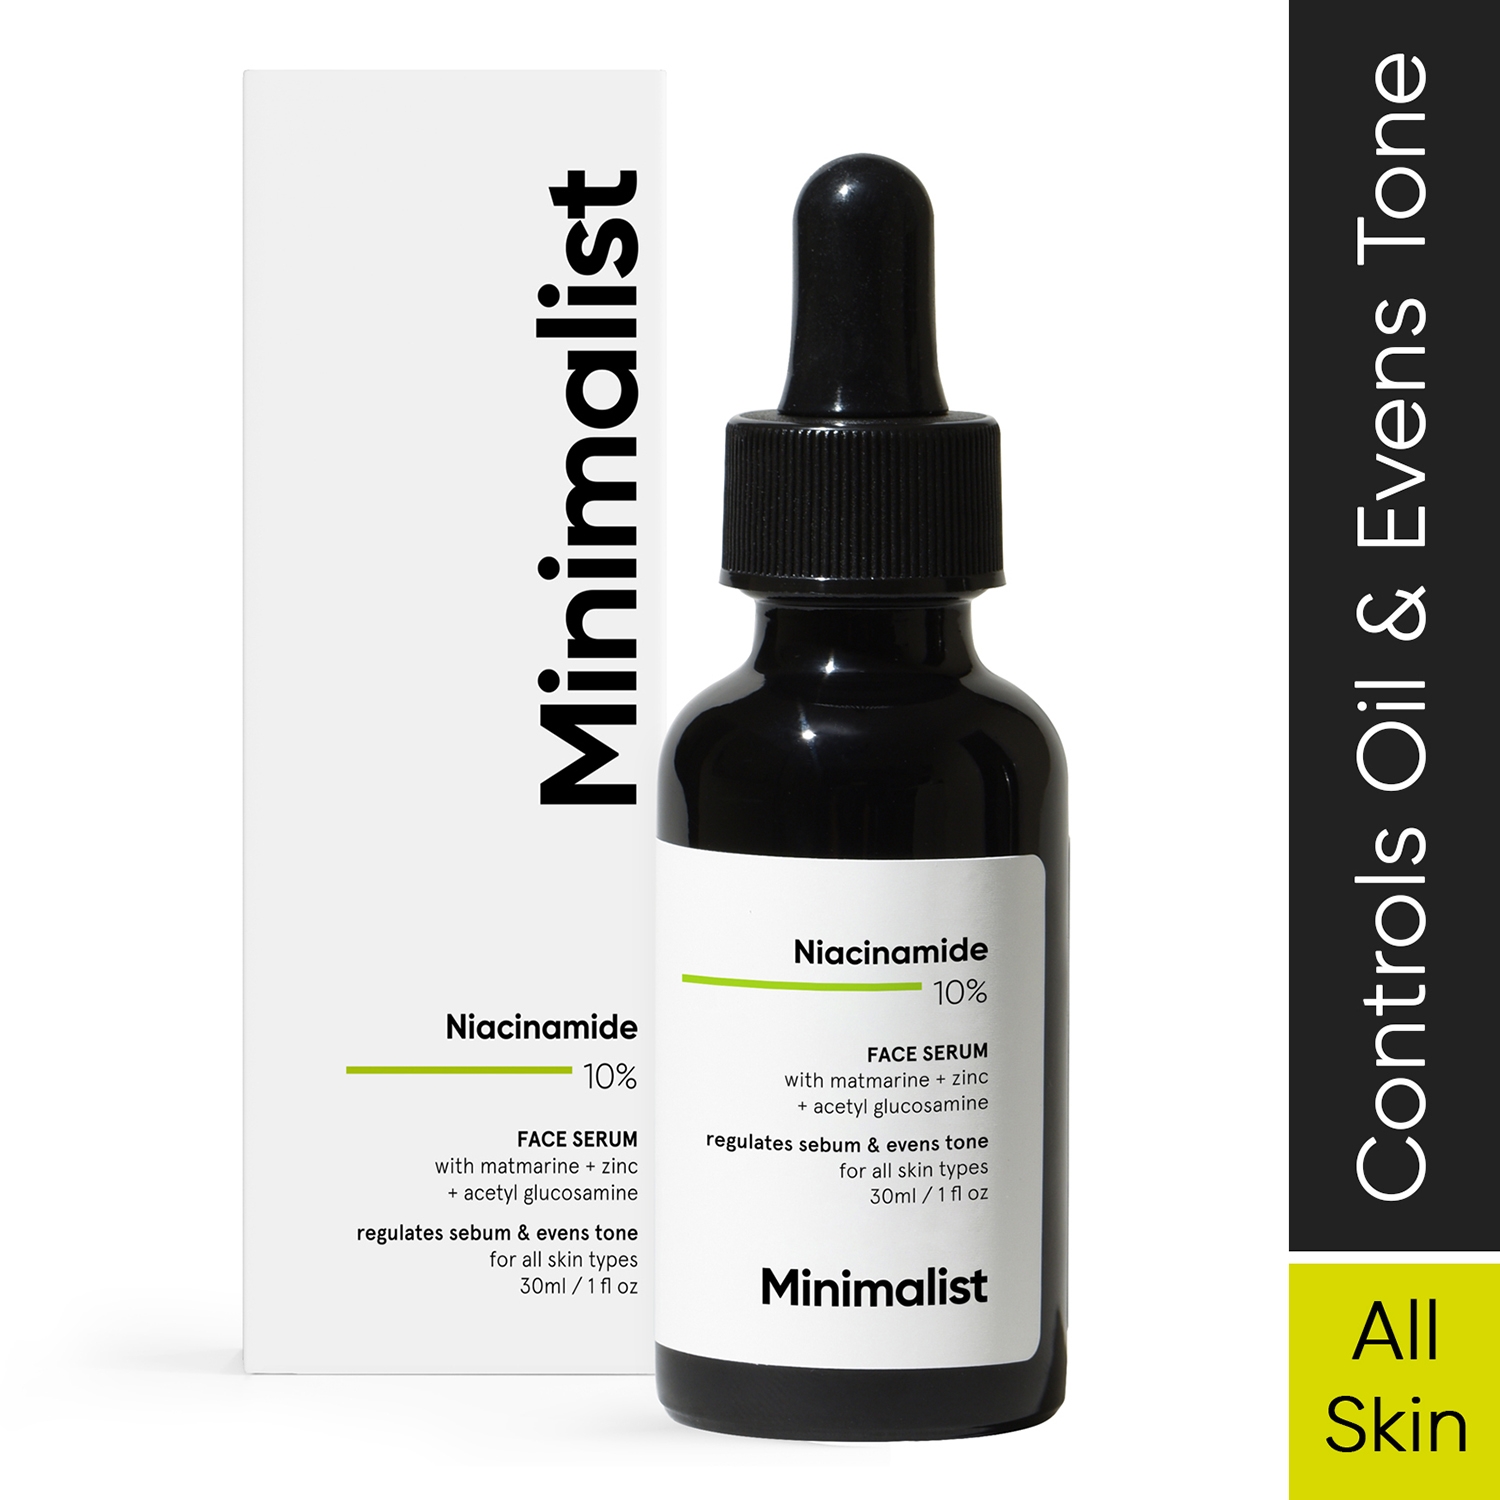 Minimalist | Minimalist 10% Niacinamide Face Serum With Matmarine + Zinc For Reducing Oil & Blemishes (30ml)